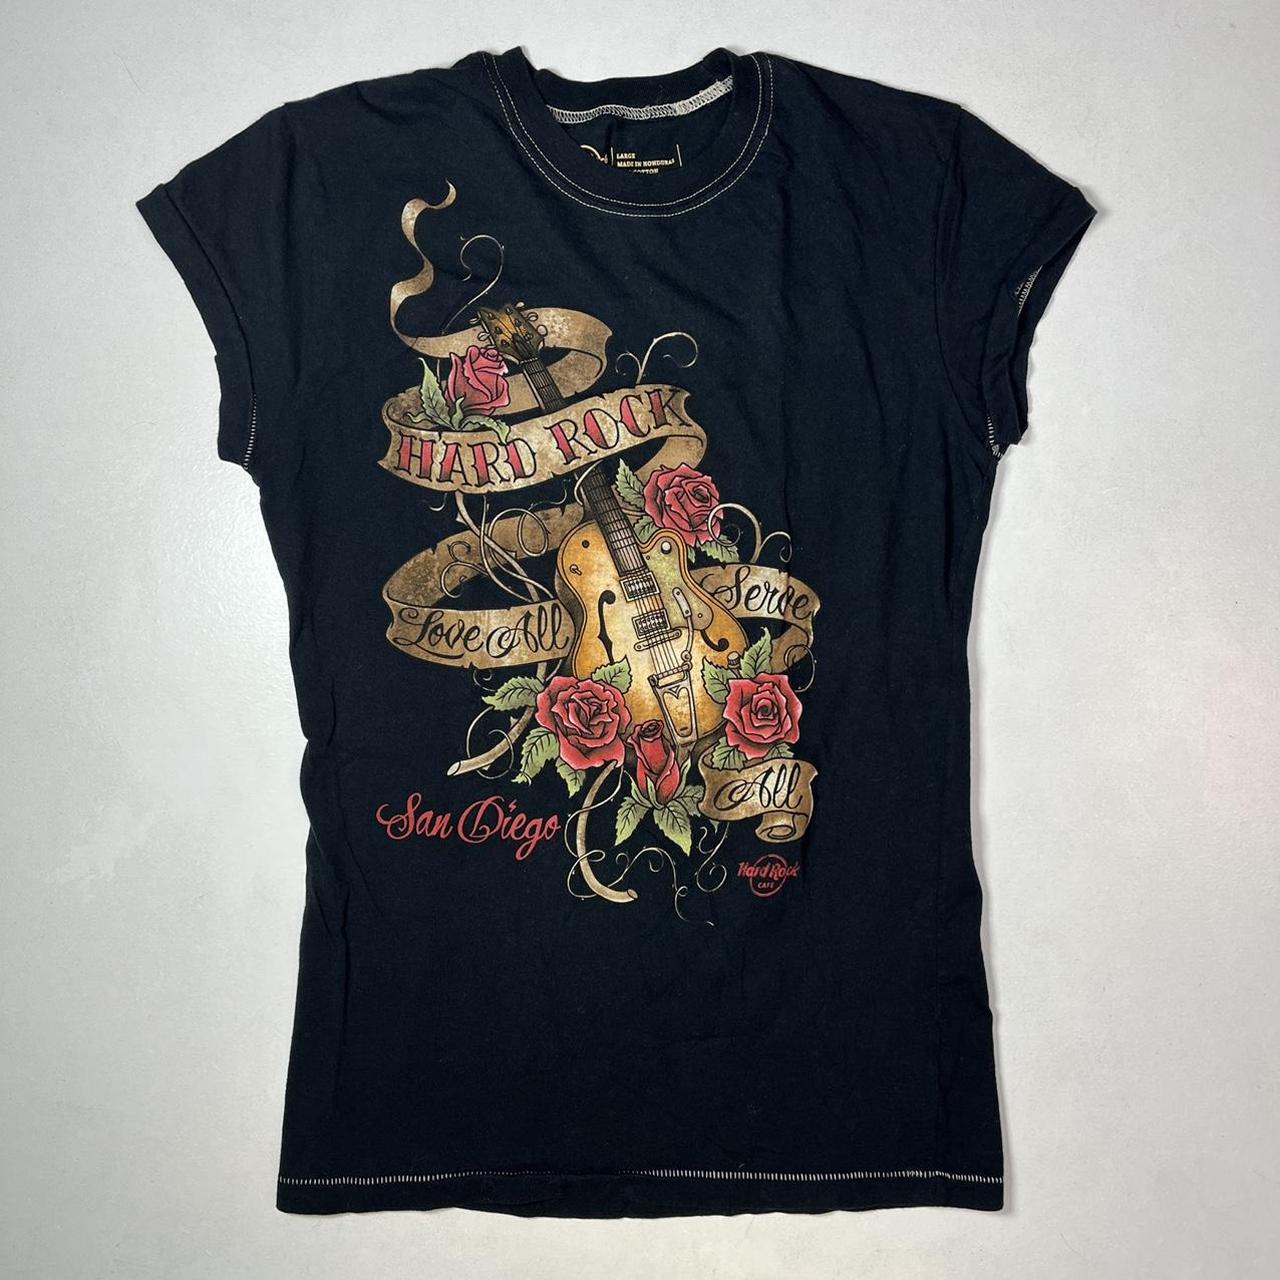 Hard Rock Cafe Women's Black T-shirt | Depop